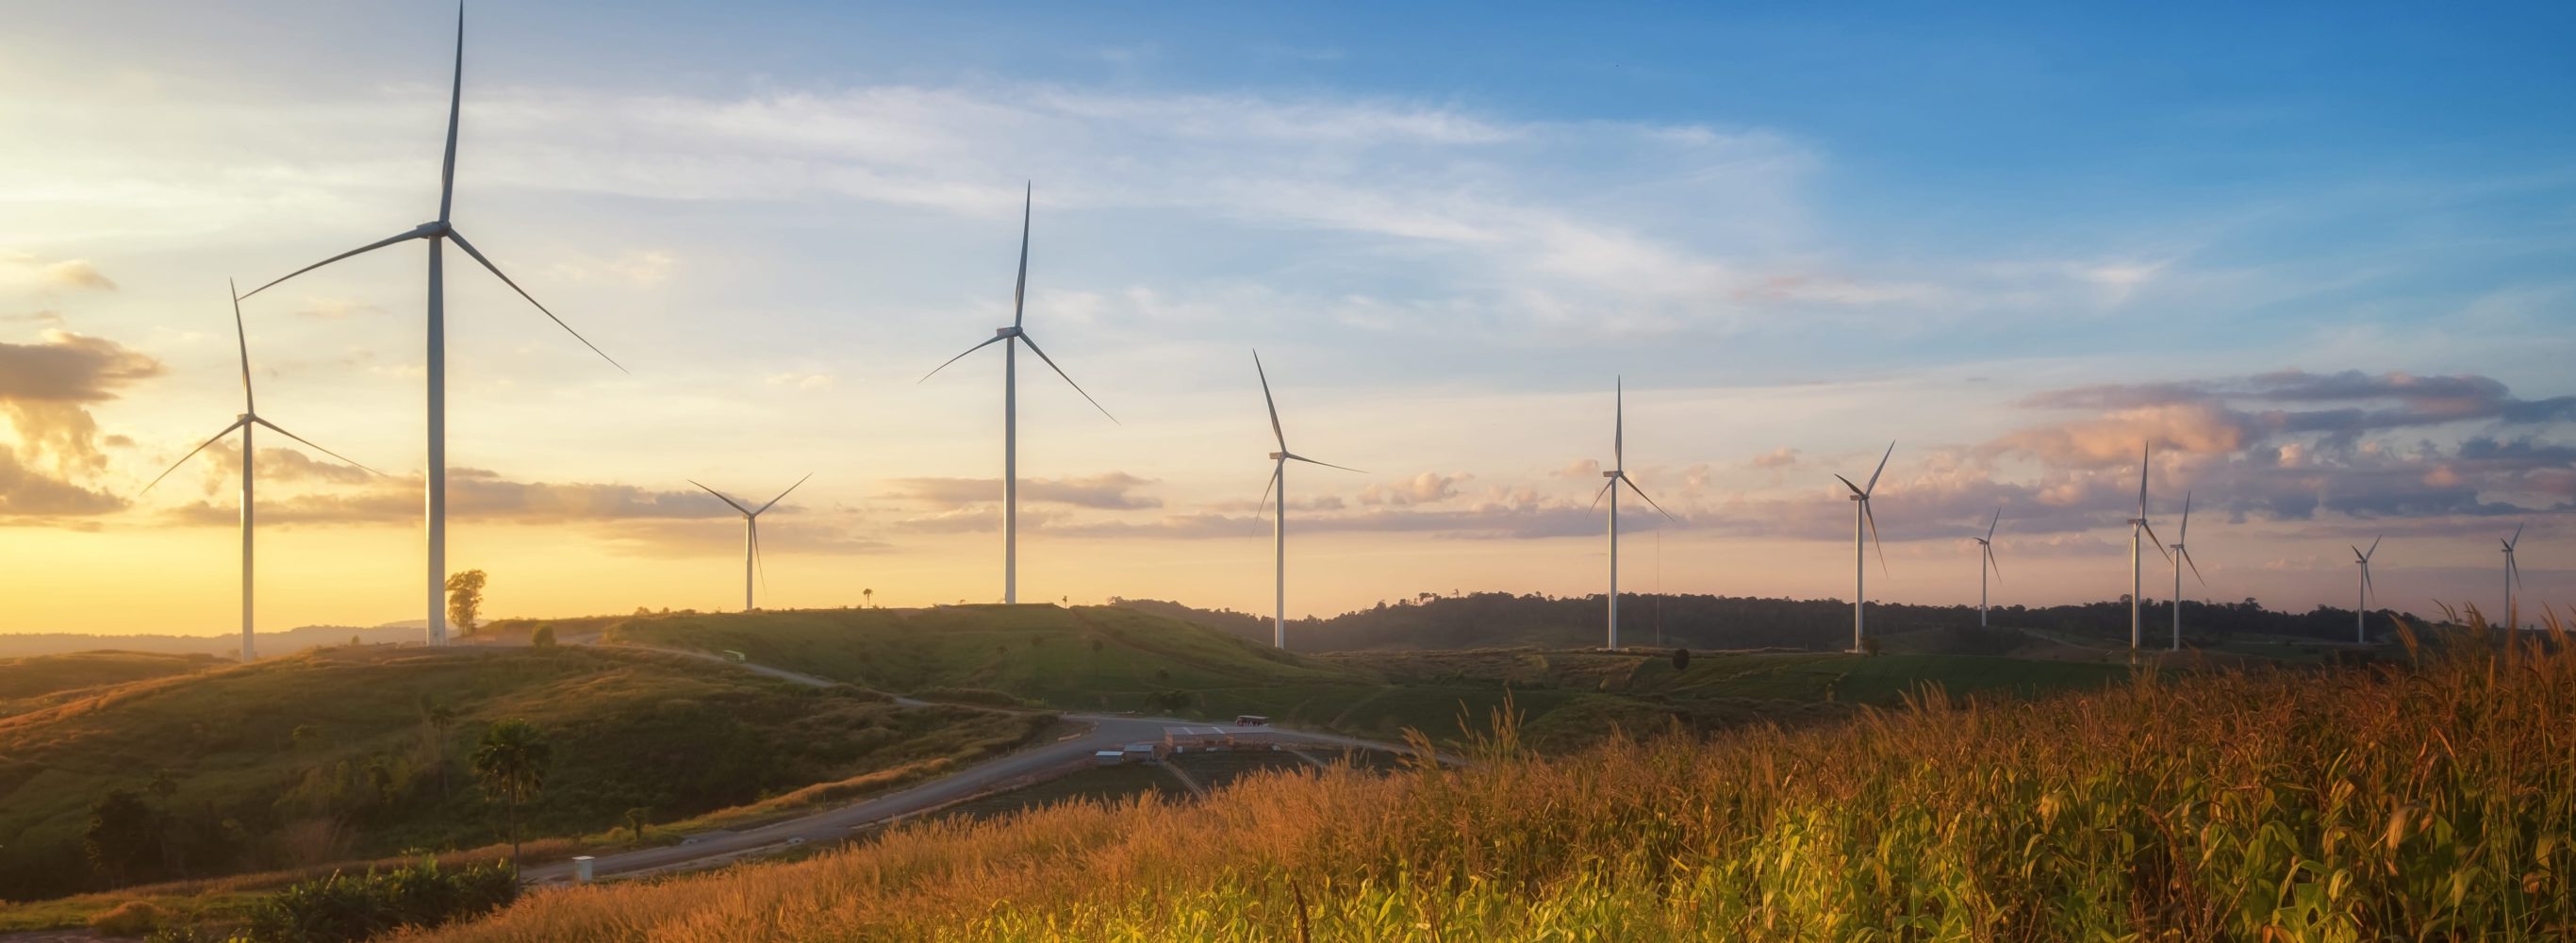 Wind turbines on grassy hills and sunrise